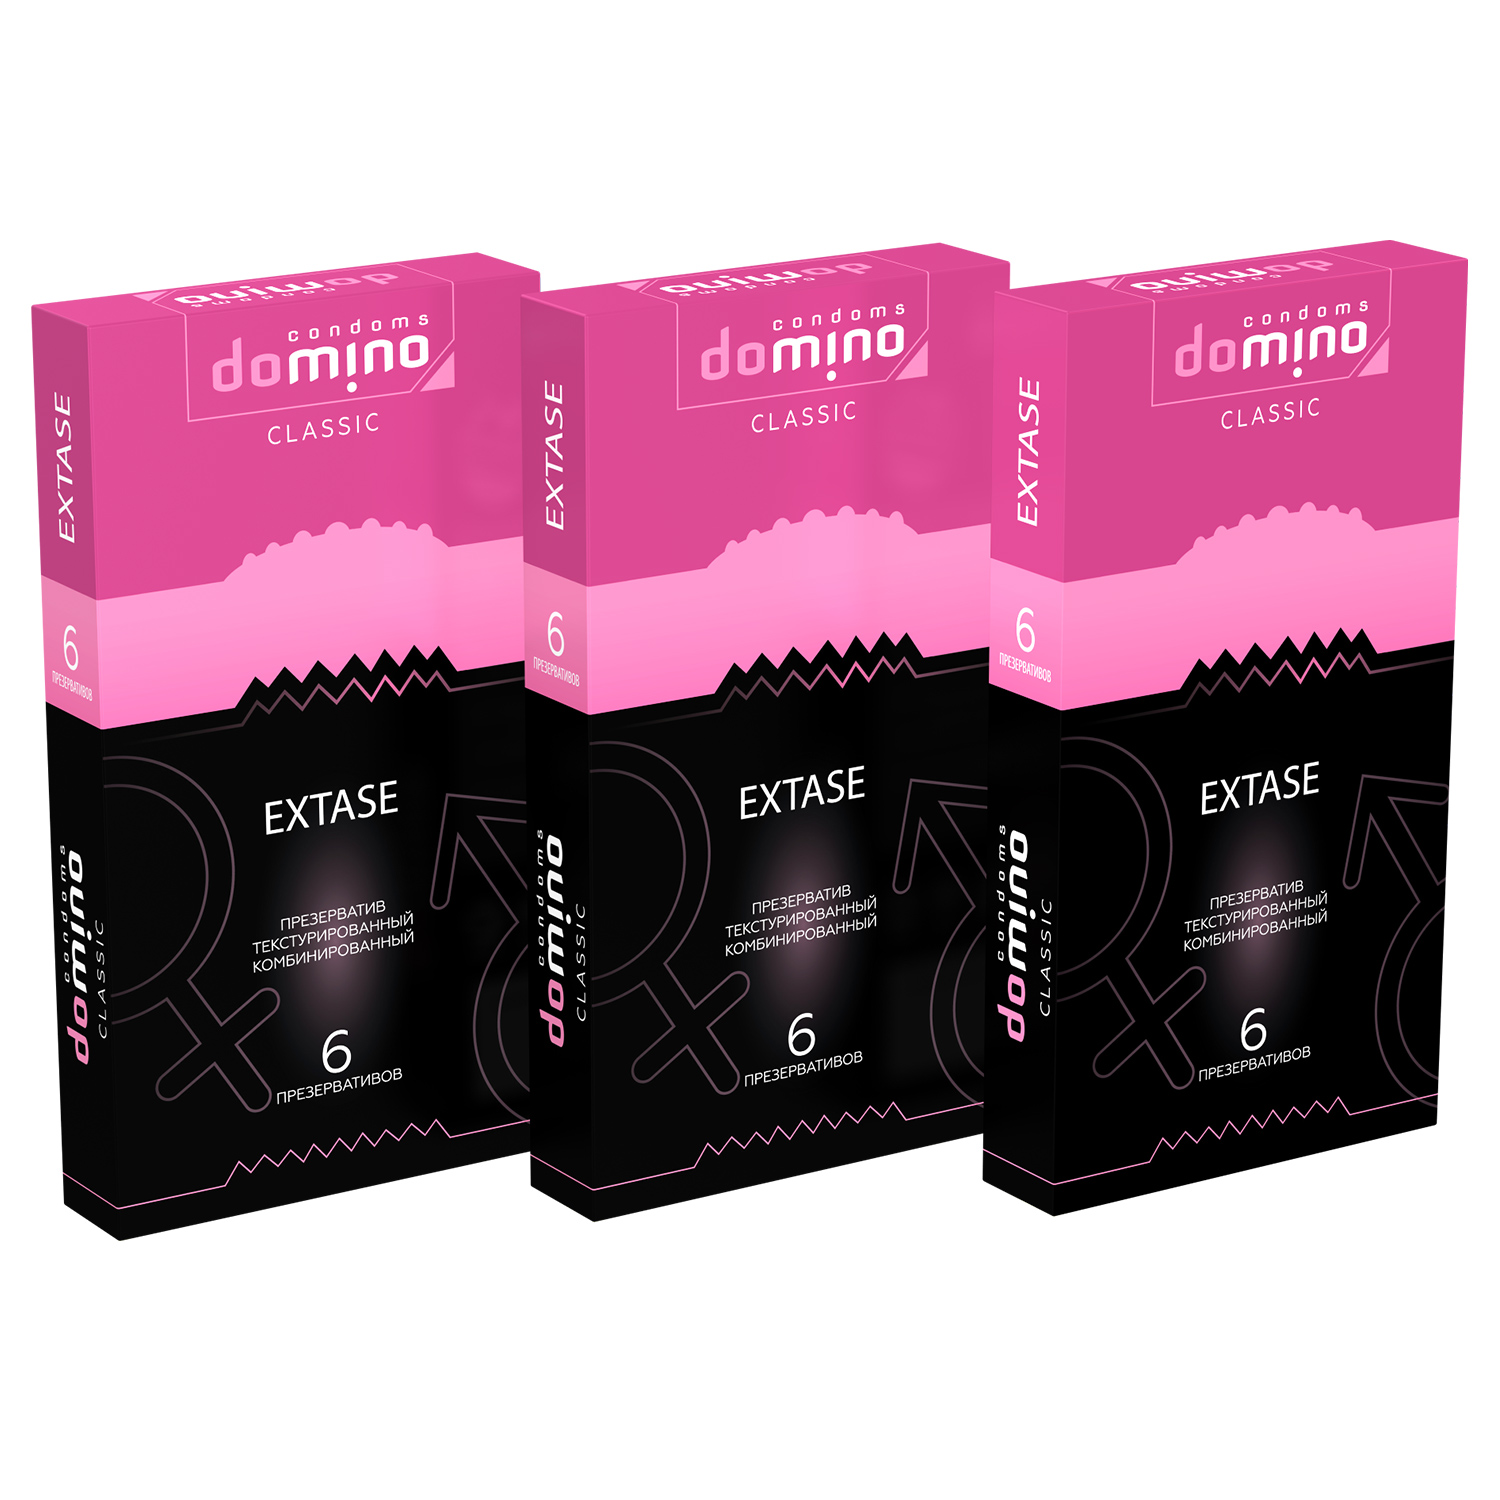 Купить Презервативы Domino Classic Extase 6 шт комплект из 3 пачек